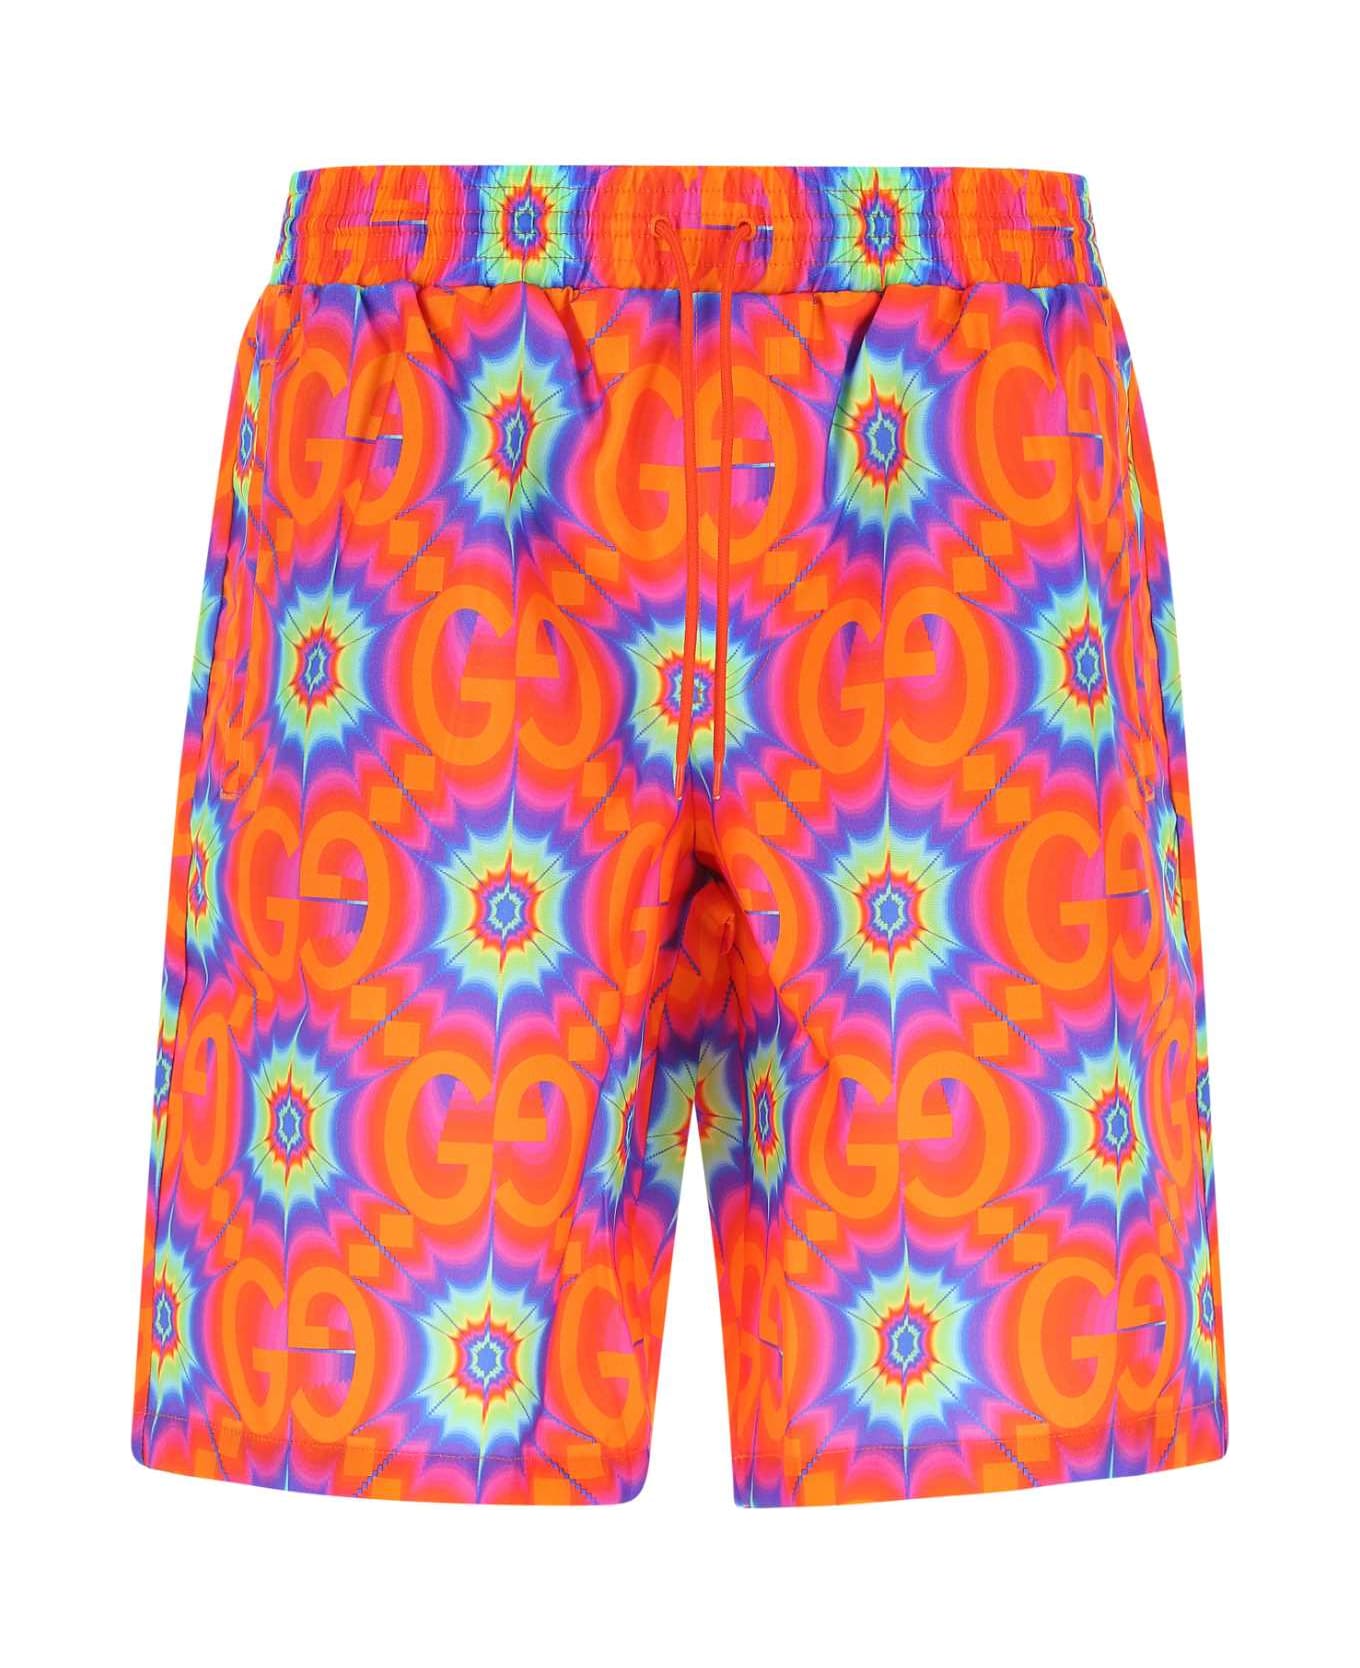 Gucci Printed Nylon Swimming Shorts - 7098 ショートパンツ